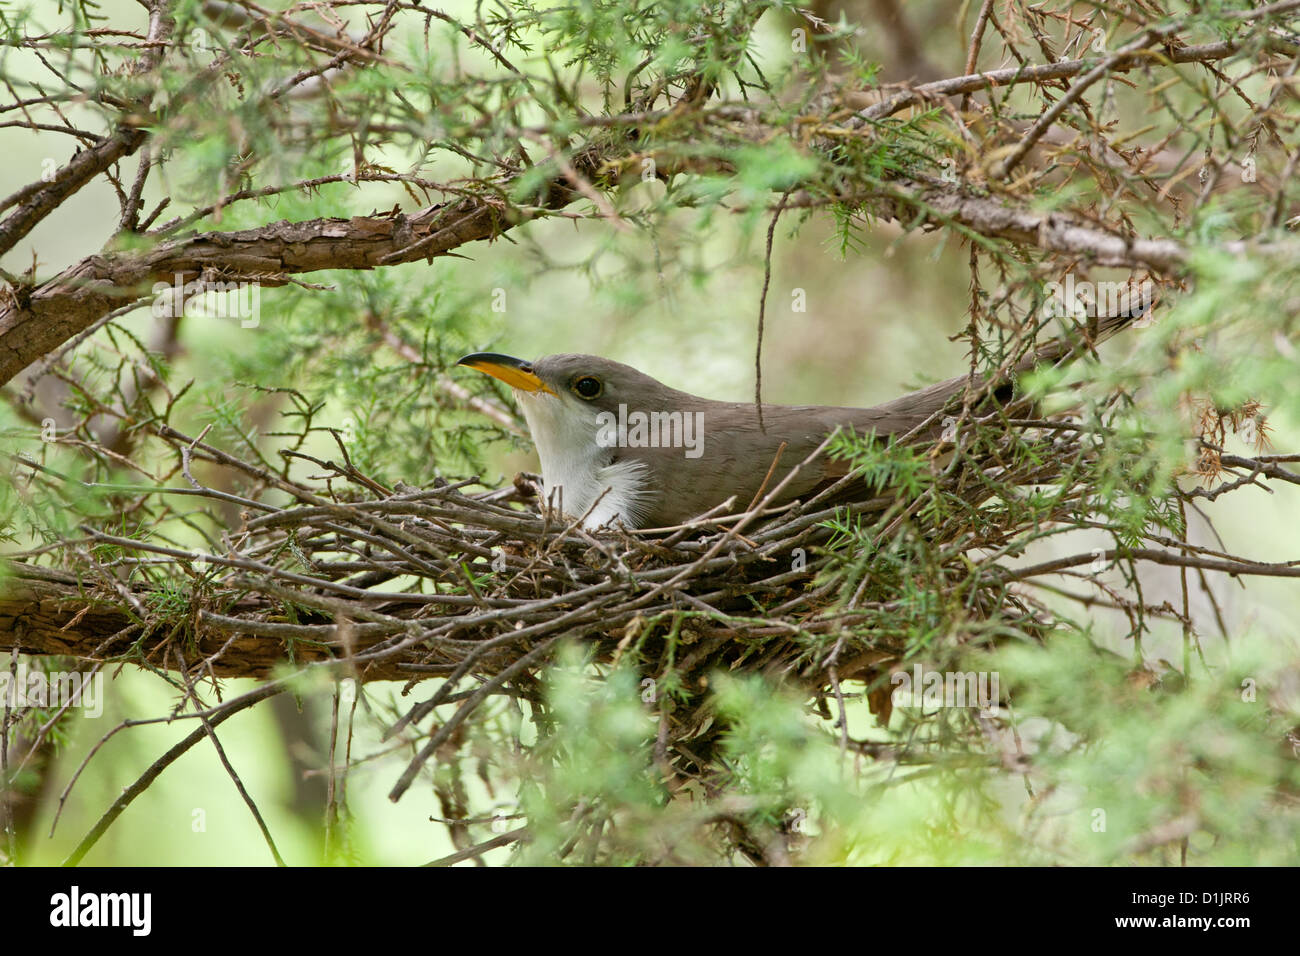 Yellow-billed Cuckoo on bird's nest bird nests birds songbird songbirds Ornithology Science Nature Wildlife Environment cuckoos Stock Photo